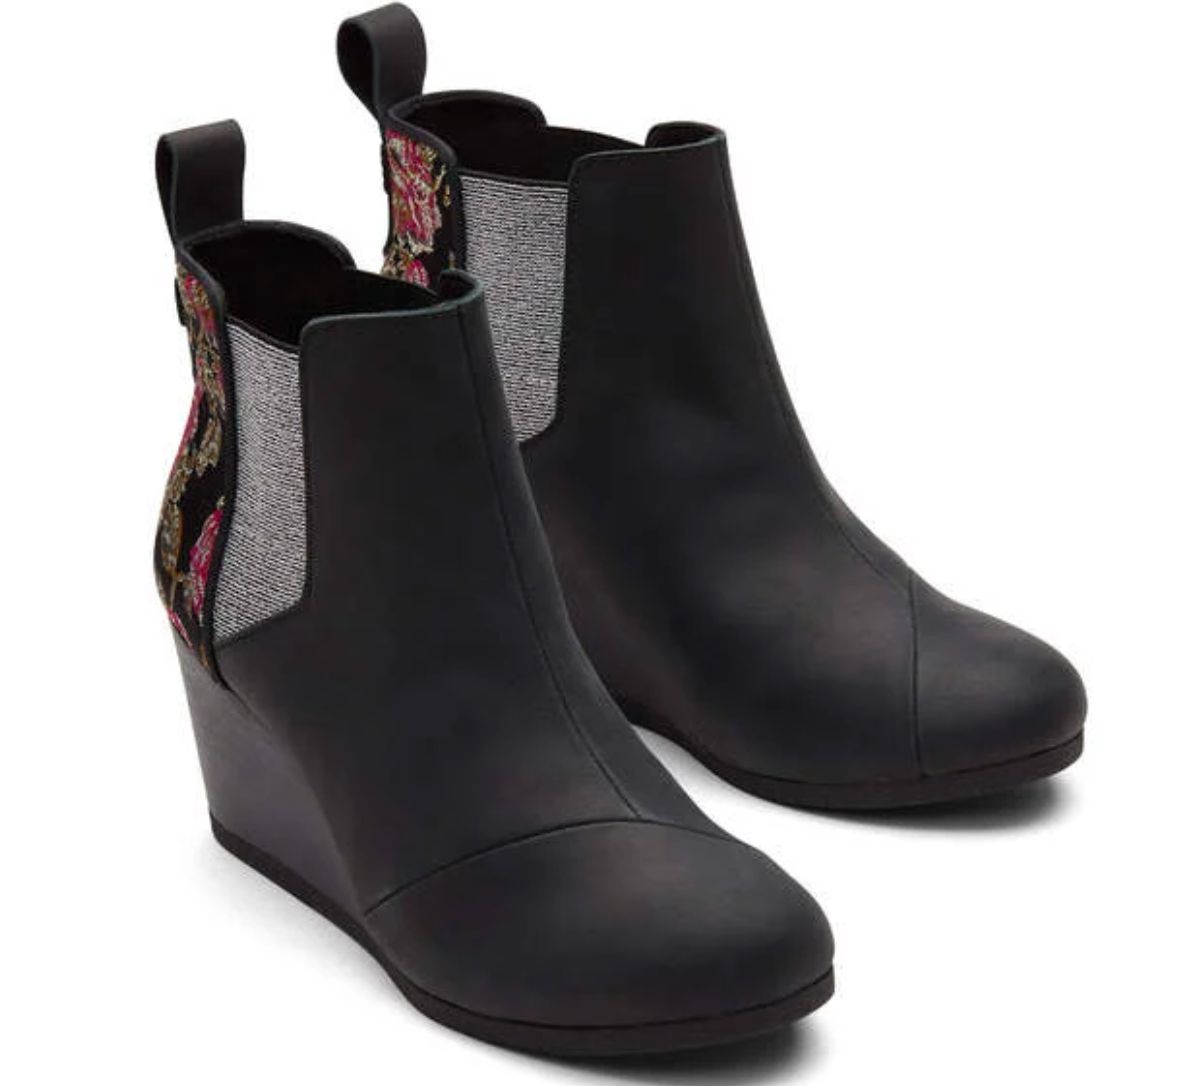 Toms Womens’ Kayley Boot in black metallic stock image